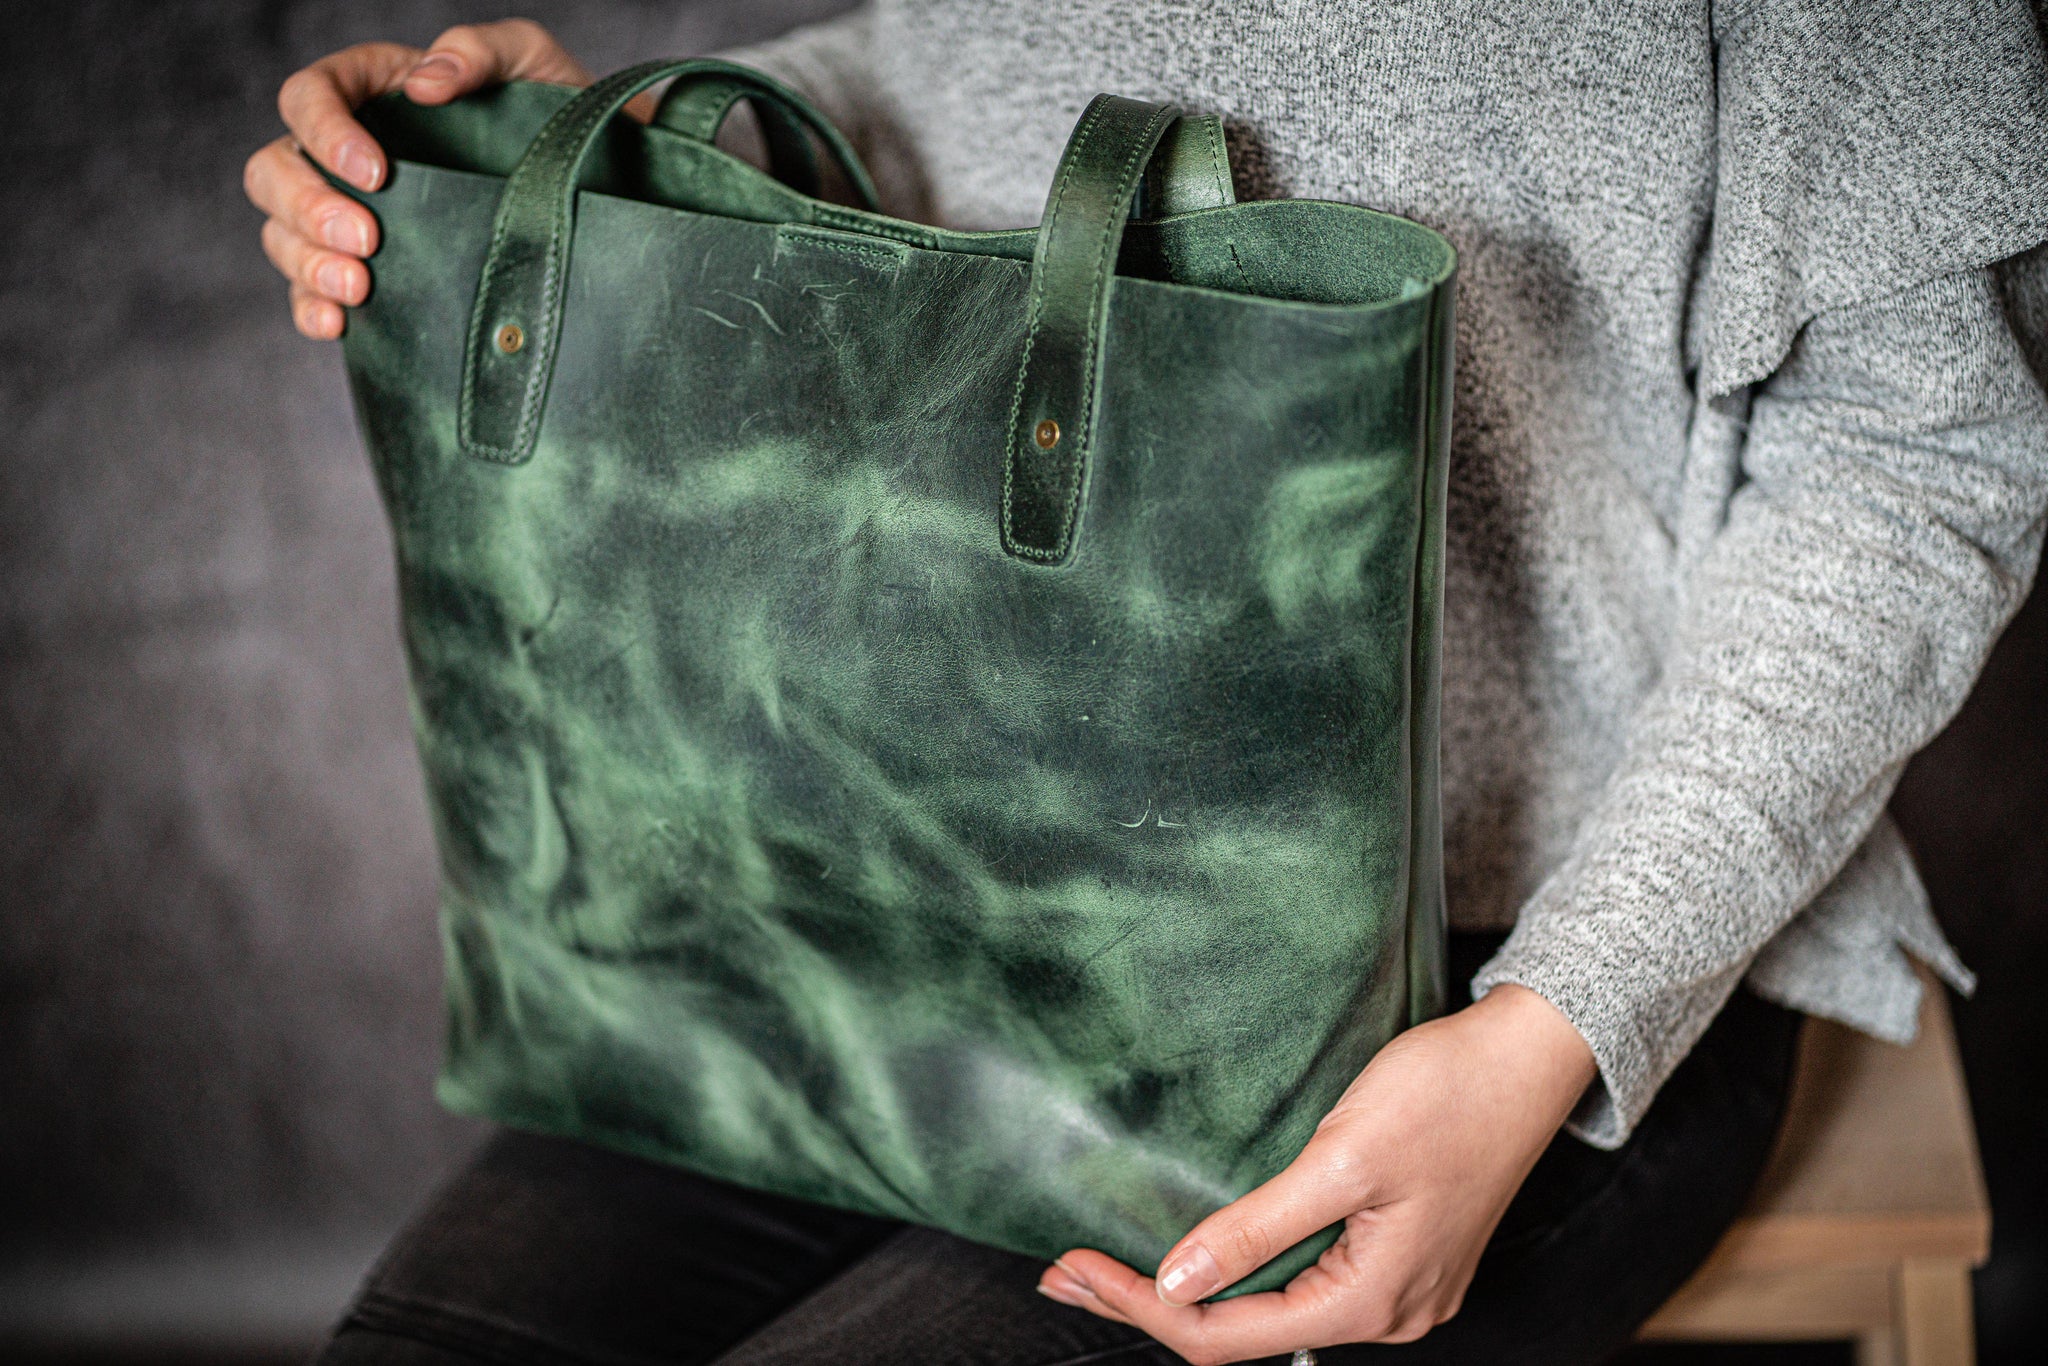 Leather Tote Shopper, Emerald Green, Tote Bag